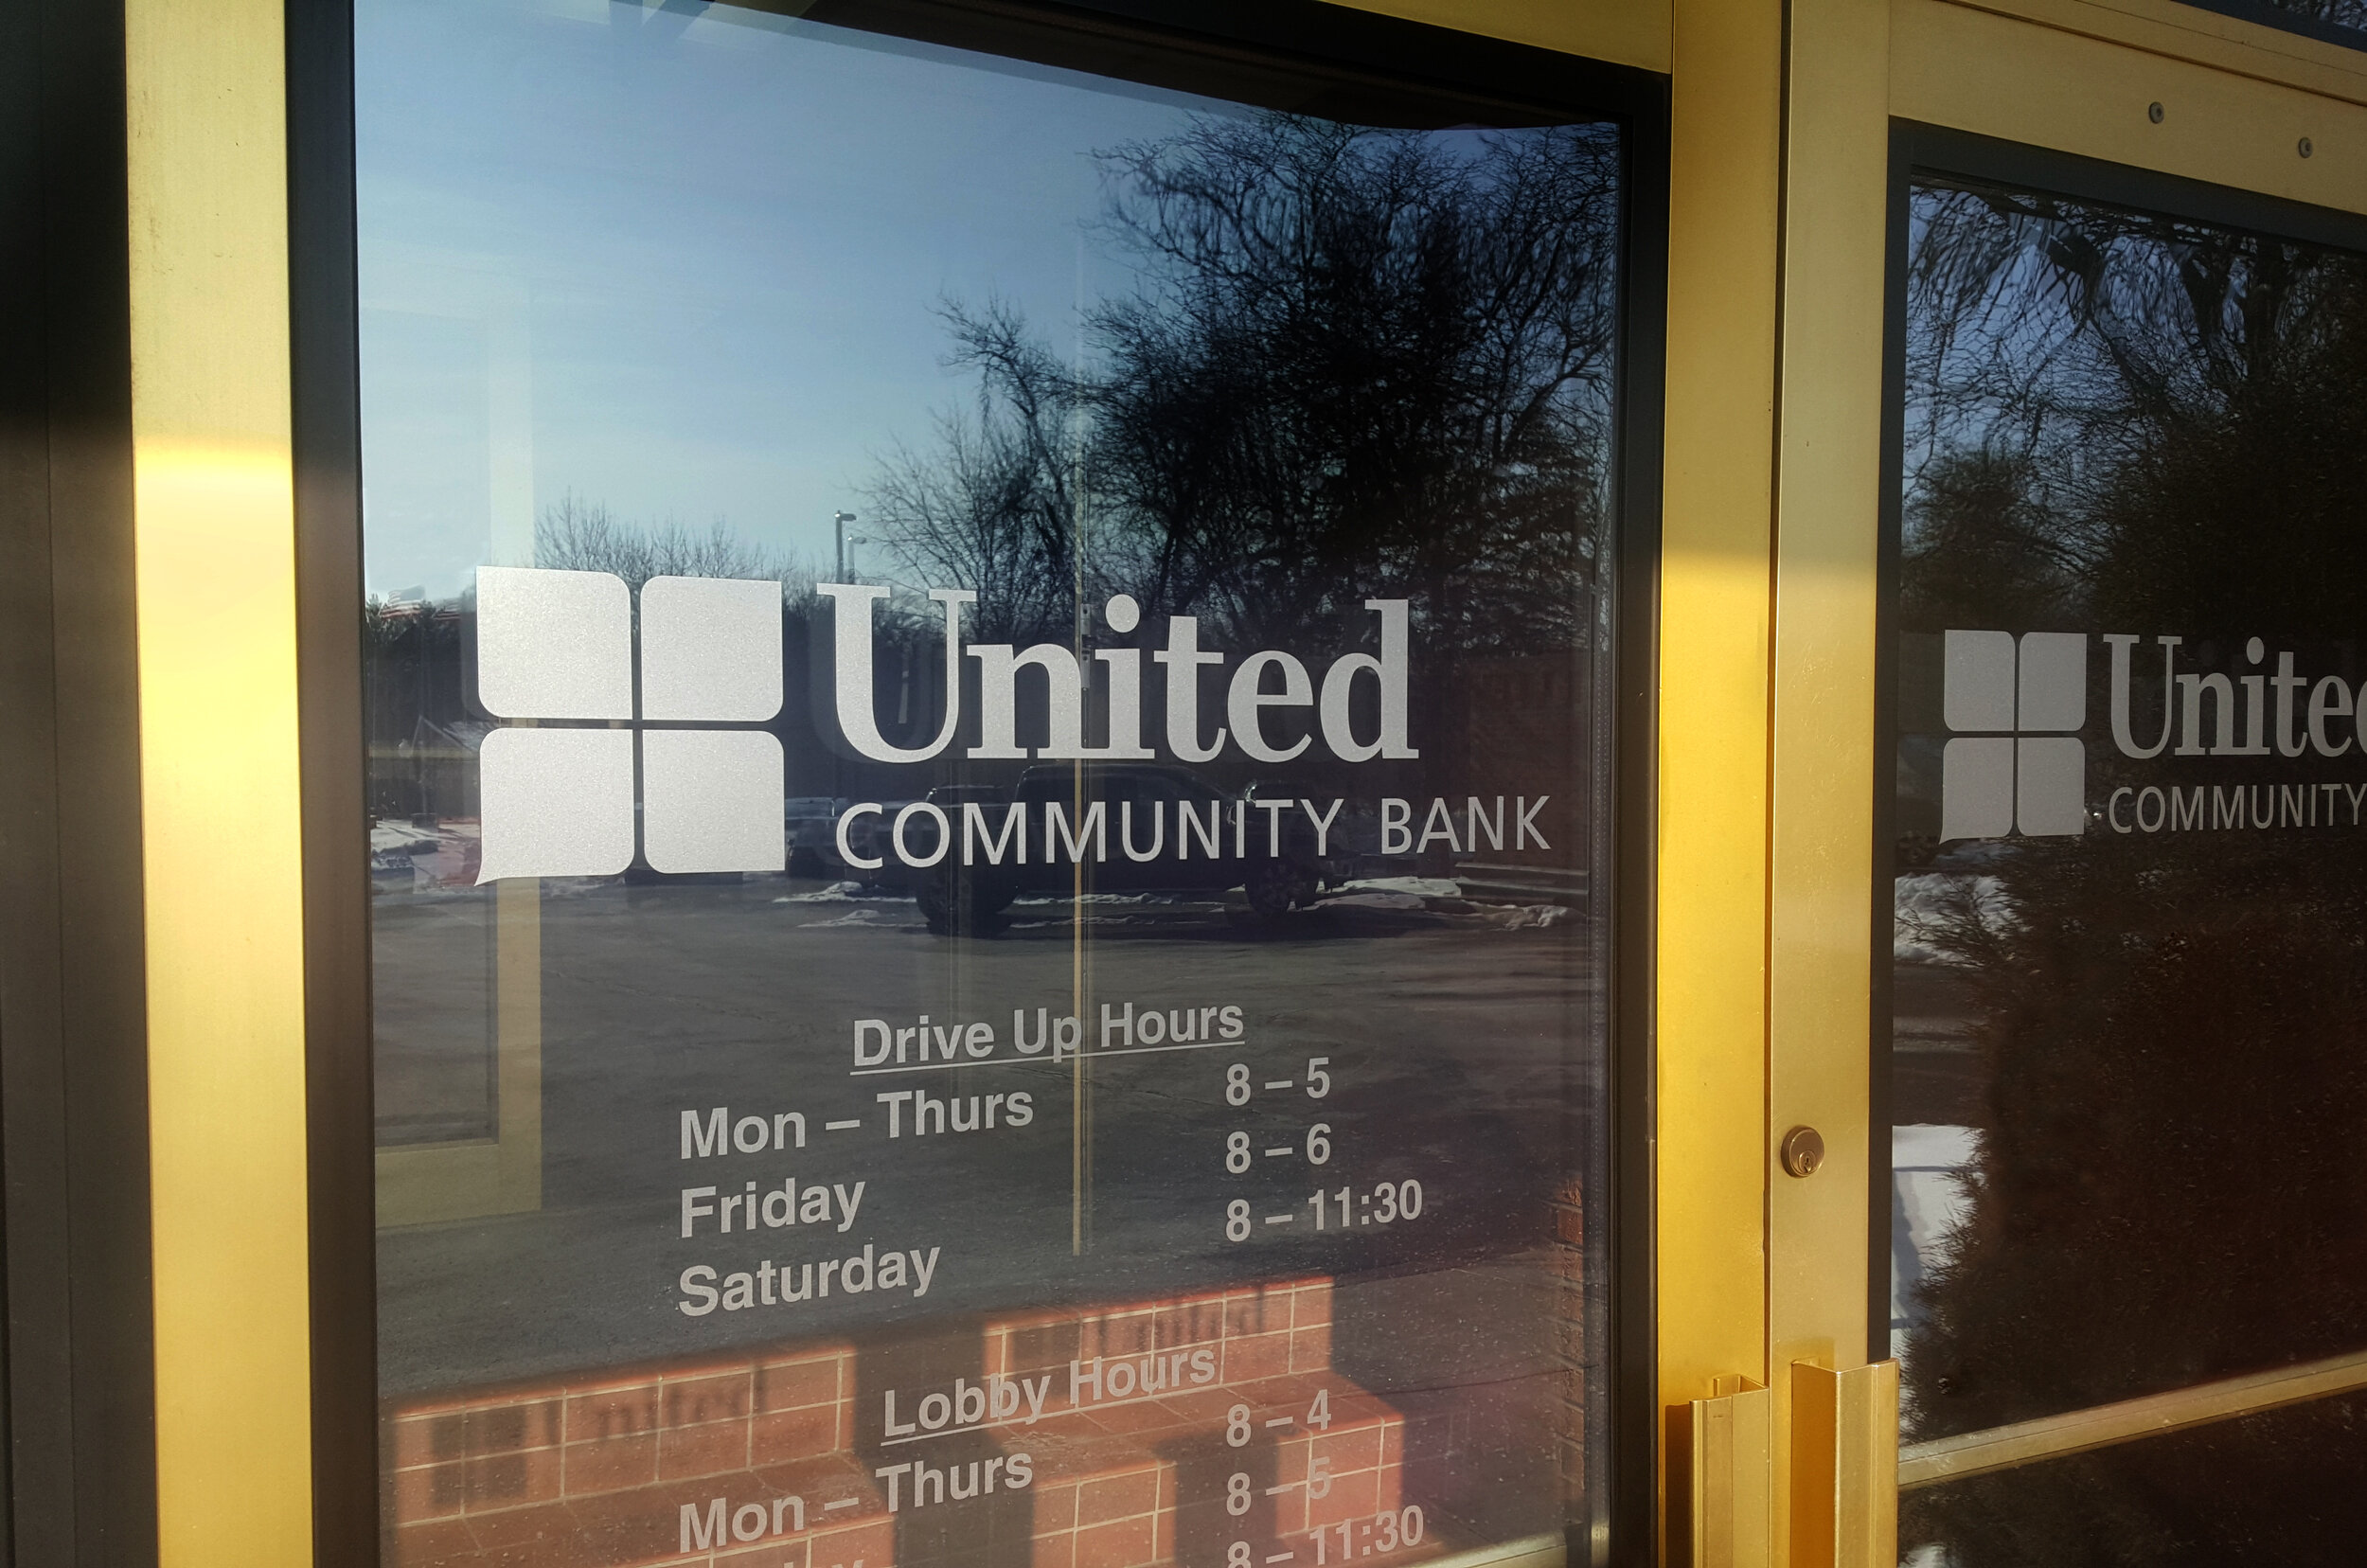   United Community Bank Entrance ID Signs  